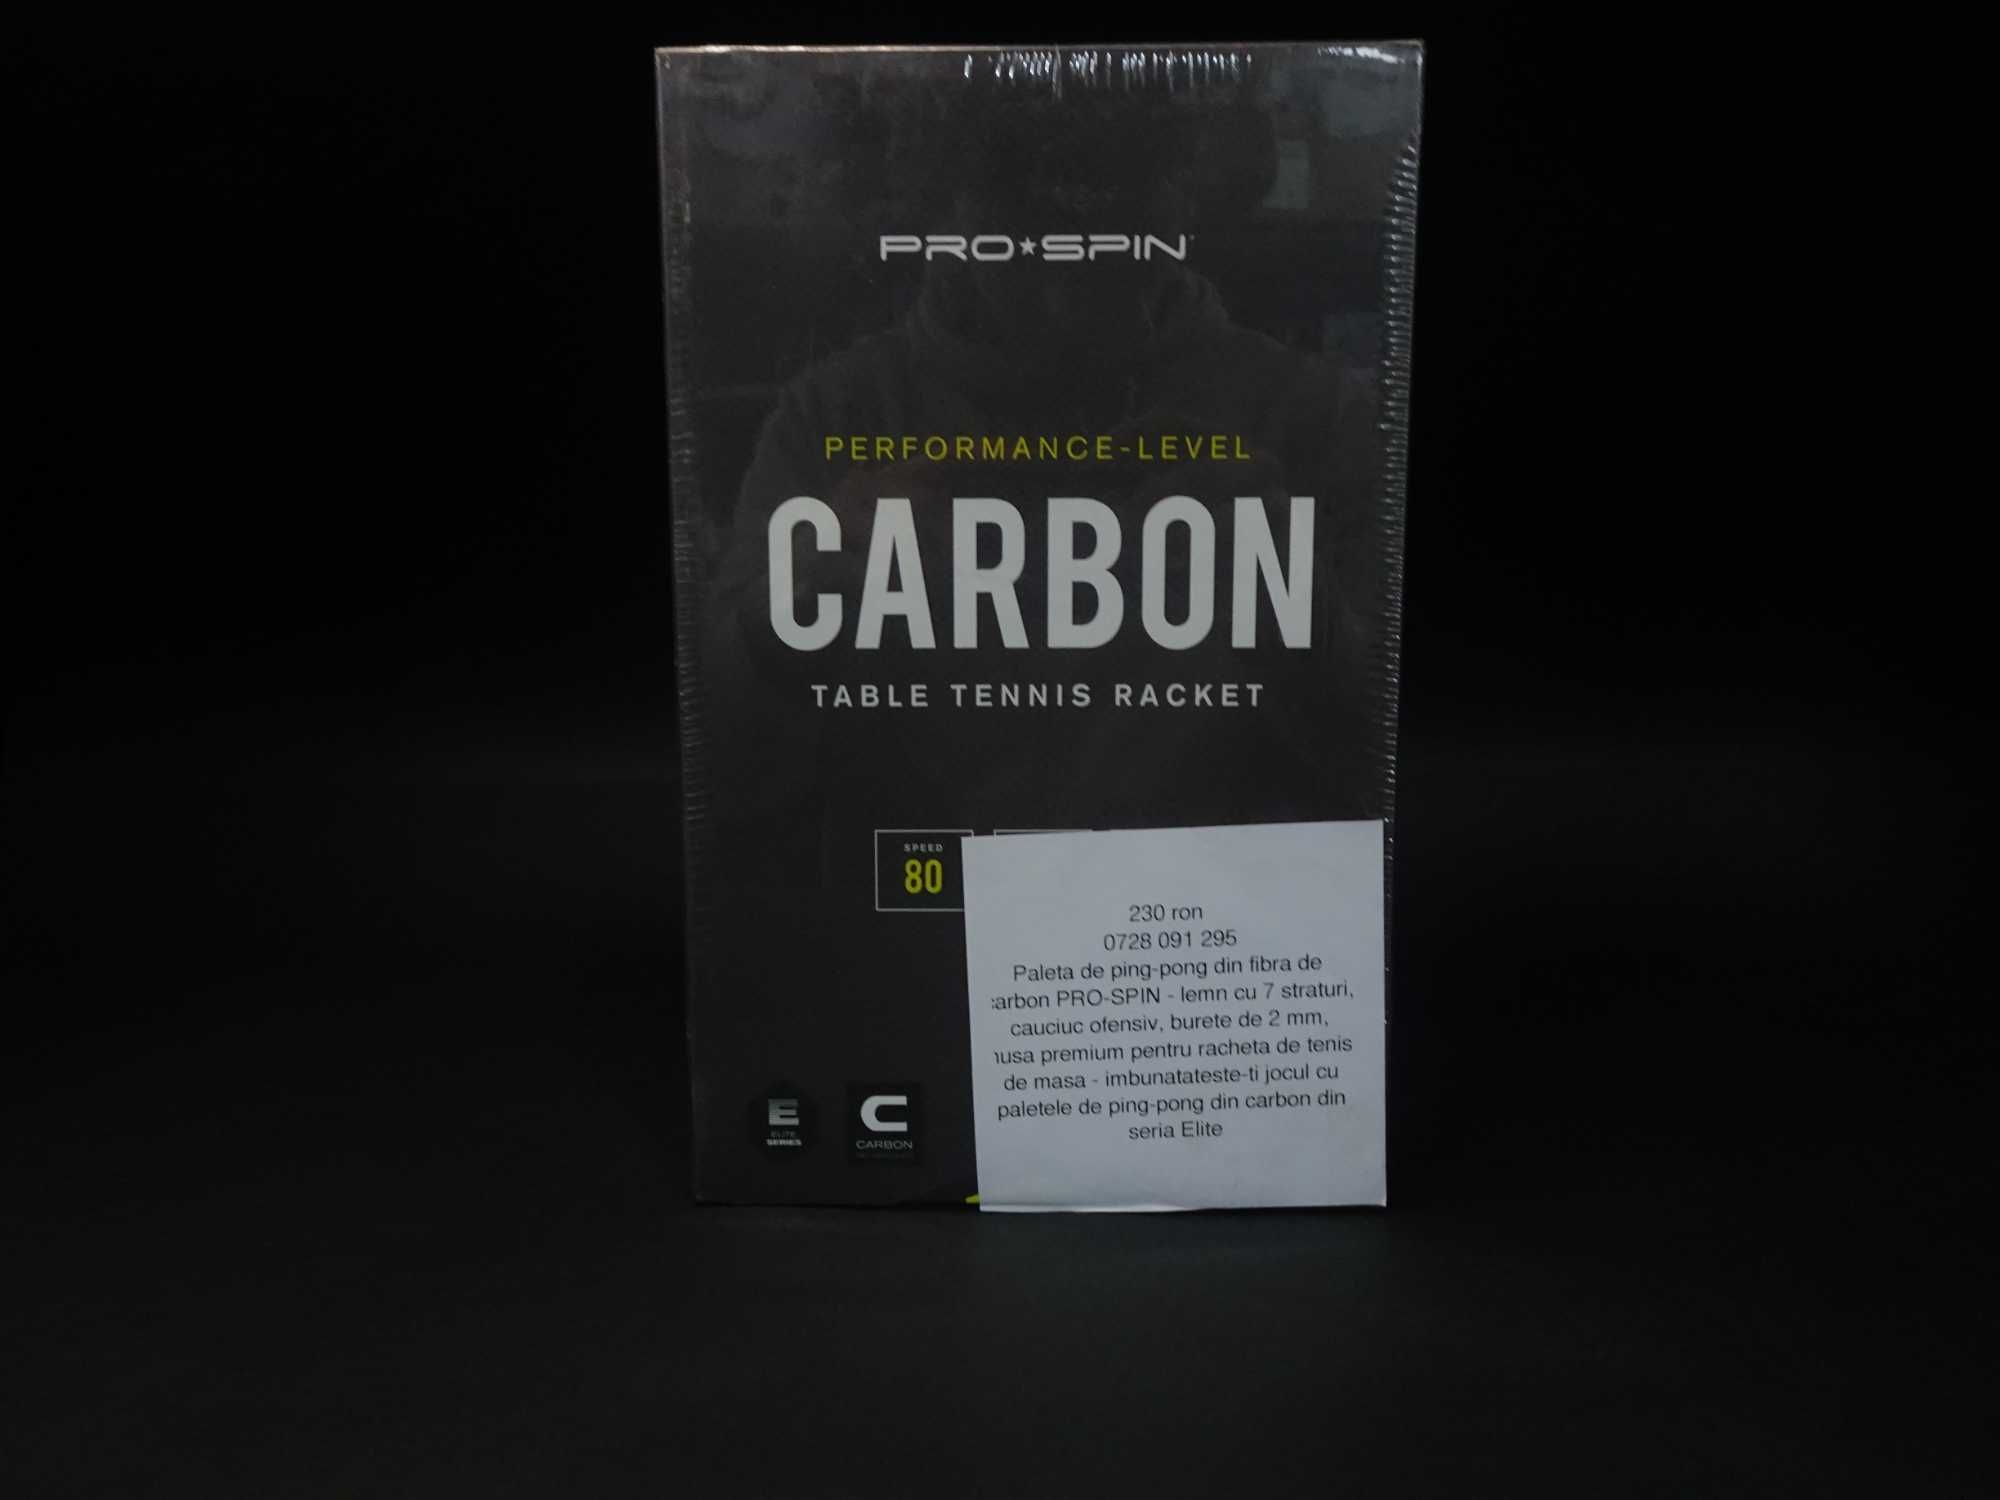 Paleta de ping-pong, fibra de carbon hard